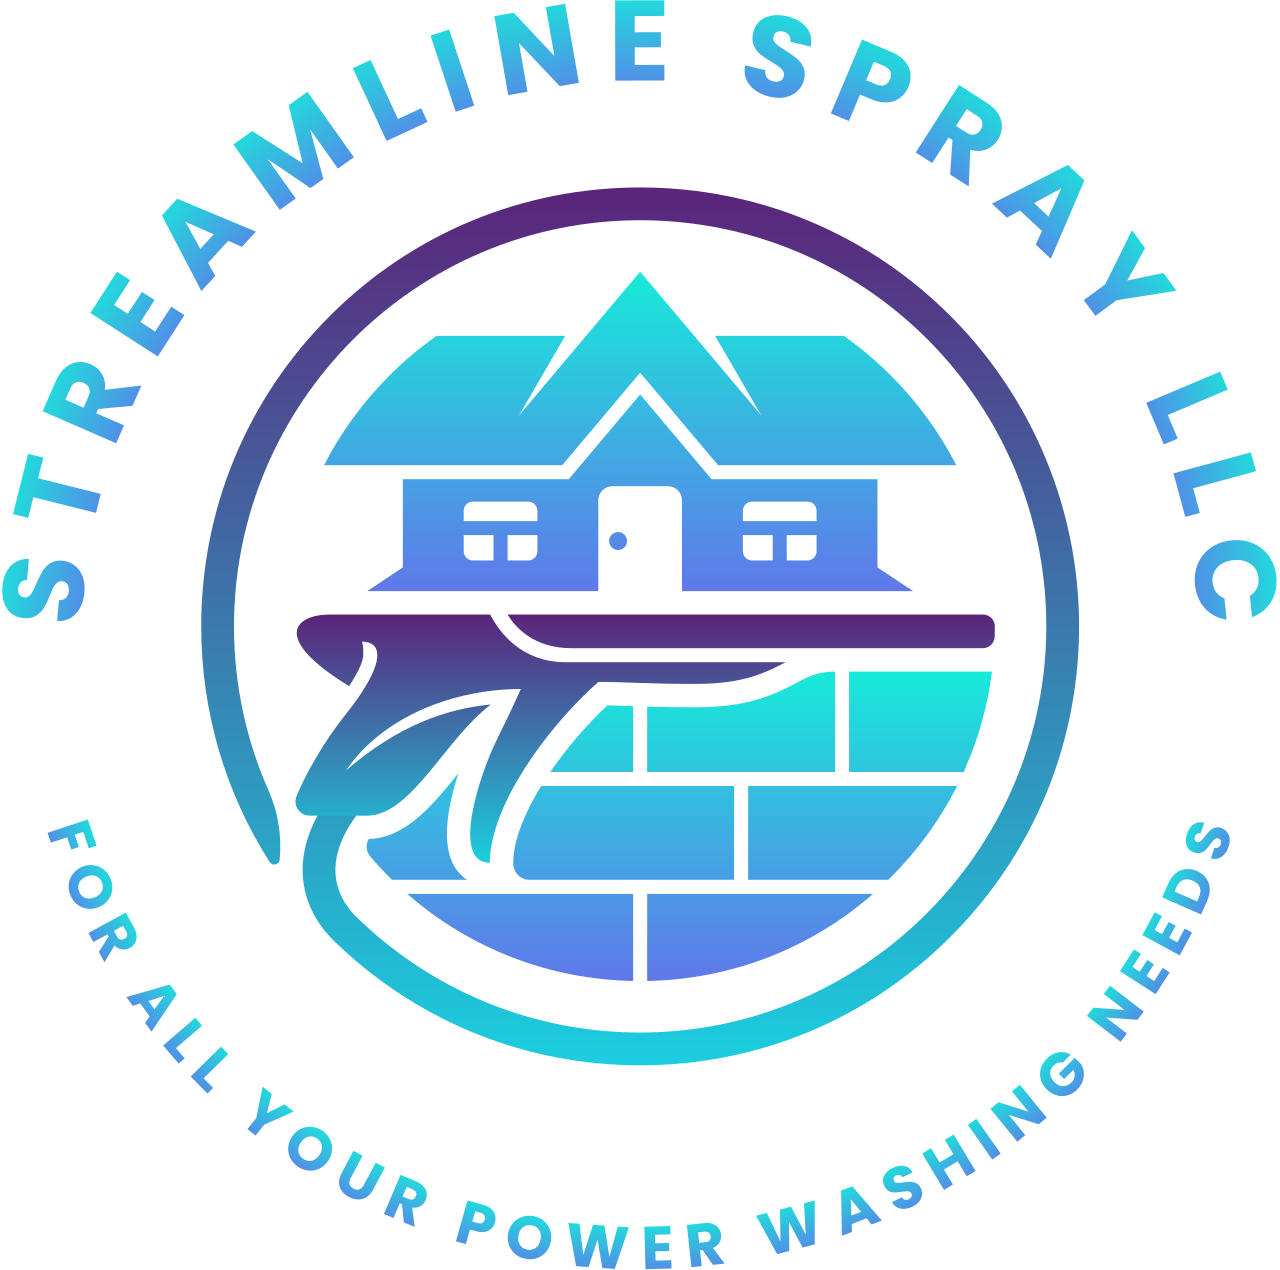 STREAMLINE SPRAY LLC's web page